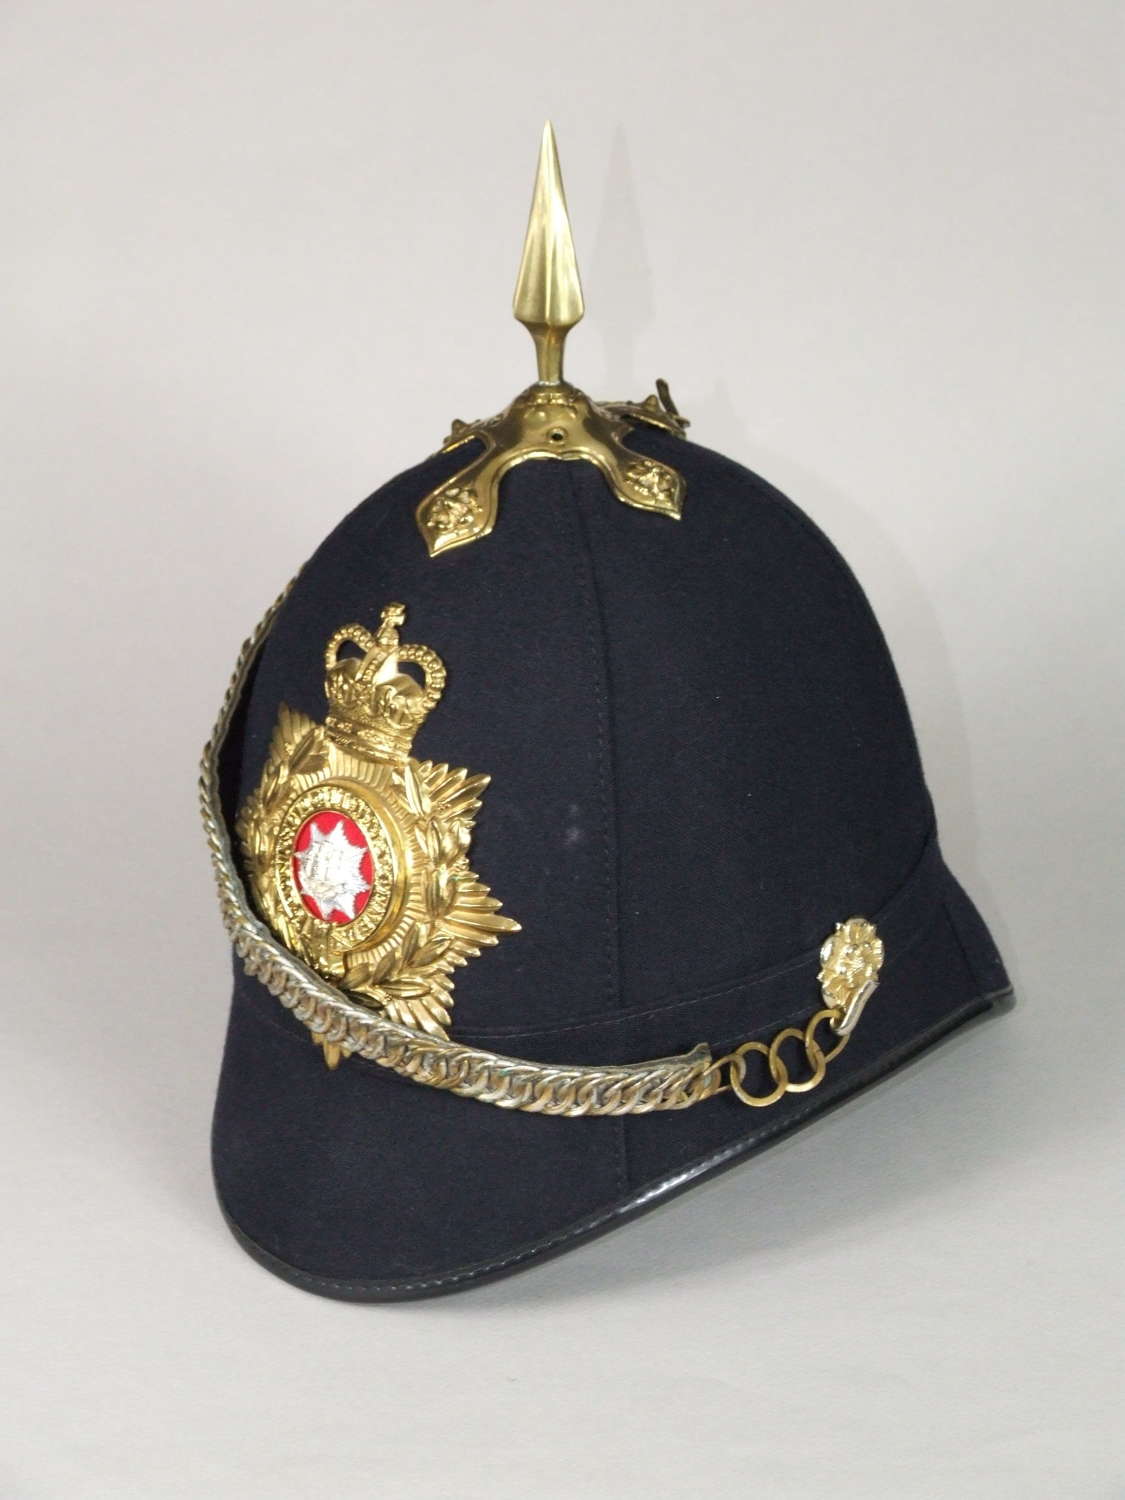 Elizabeth 11 Royal Anglian Regiment Corps of Drums Helmet